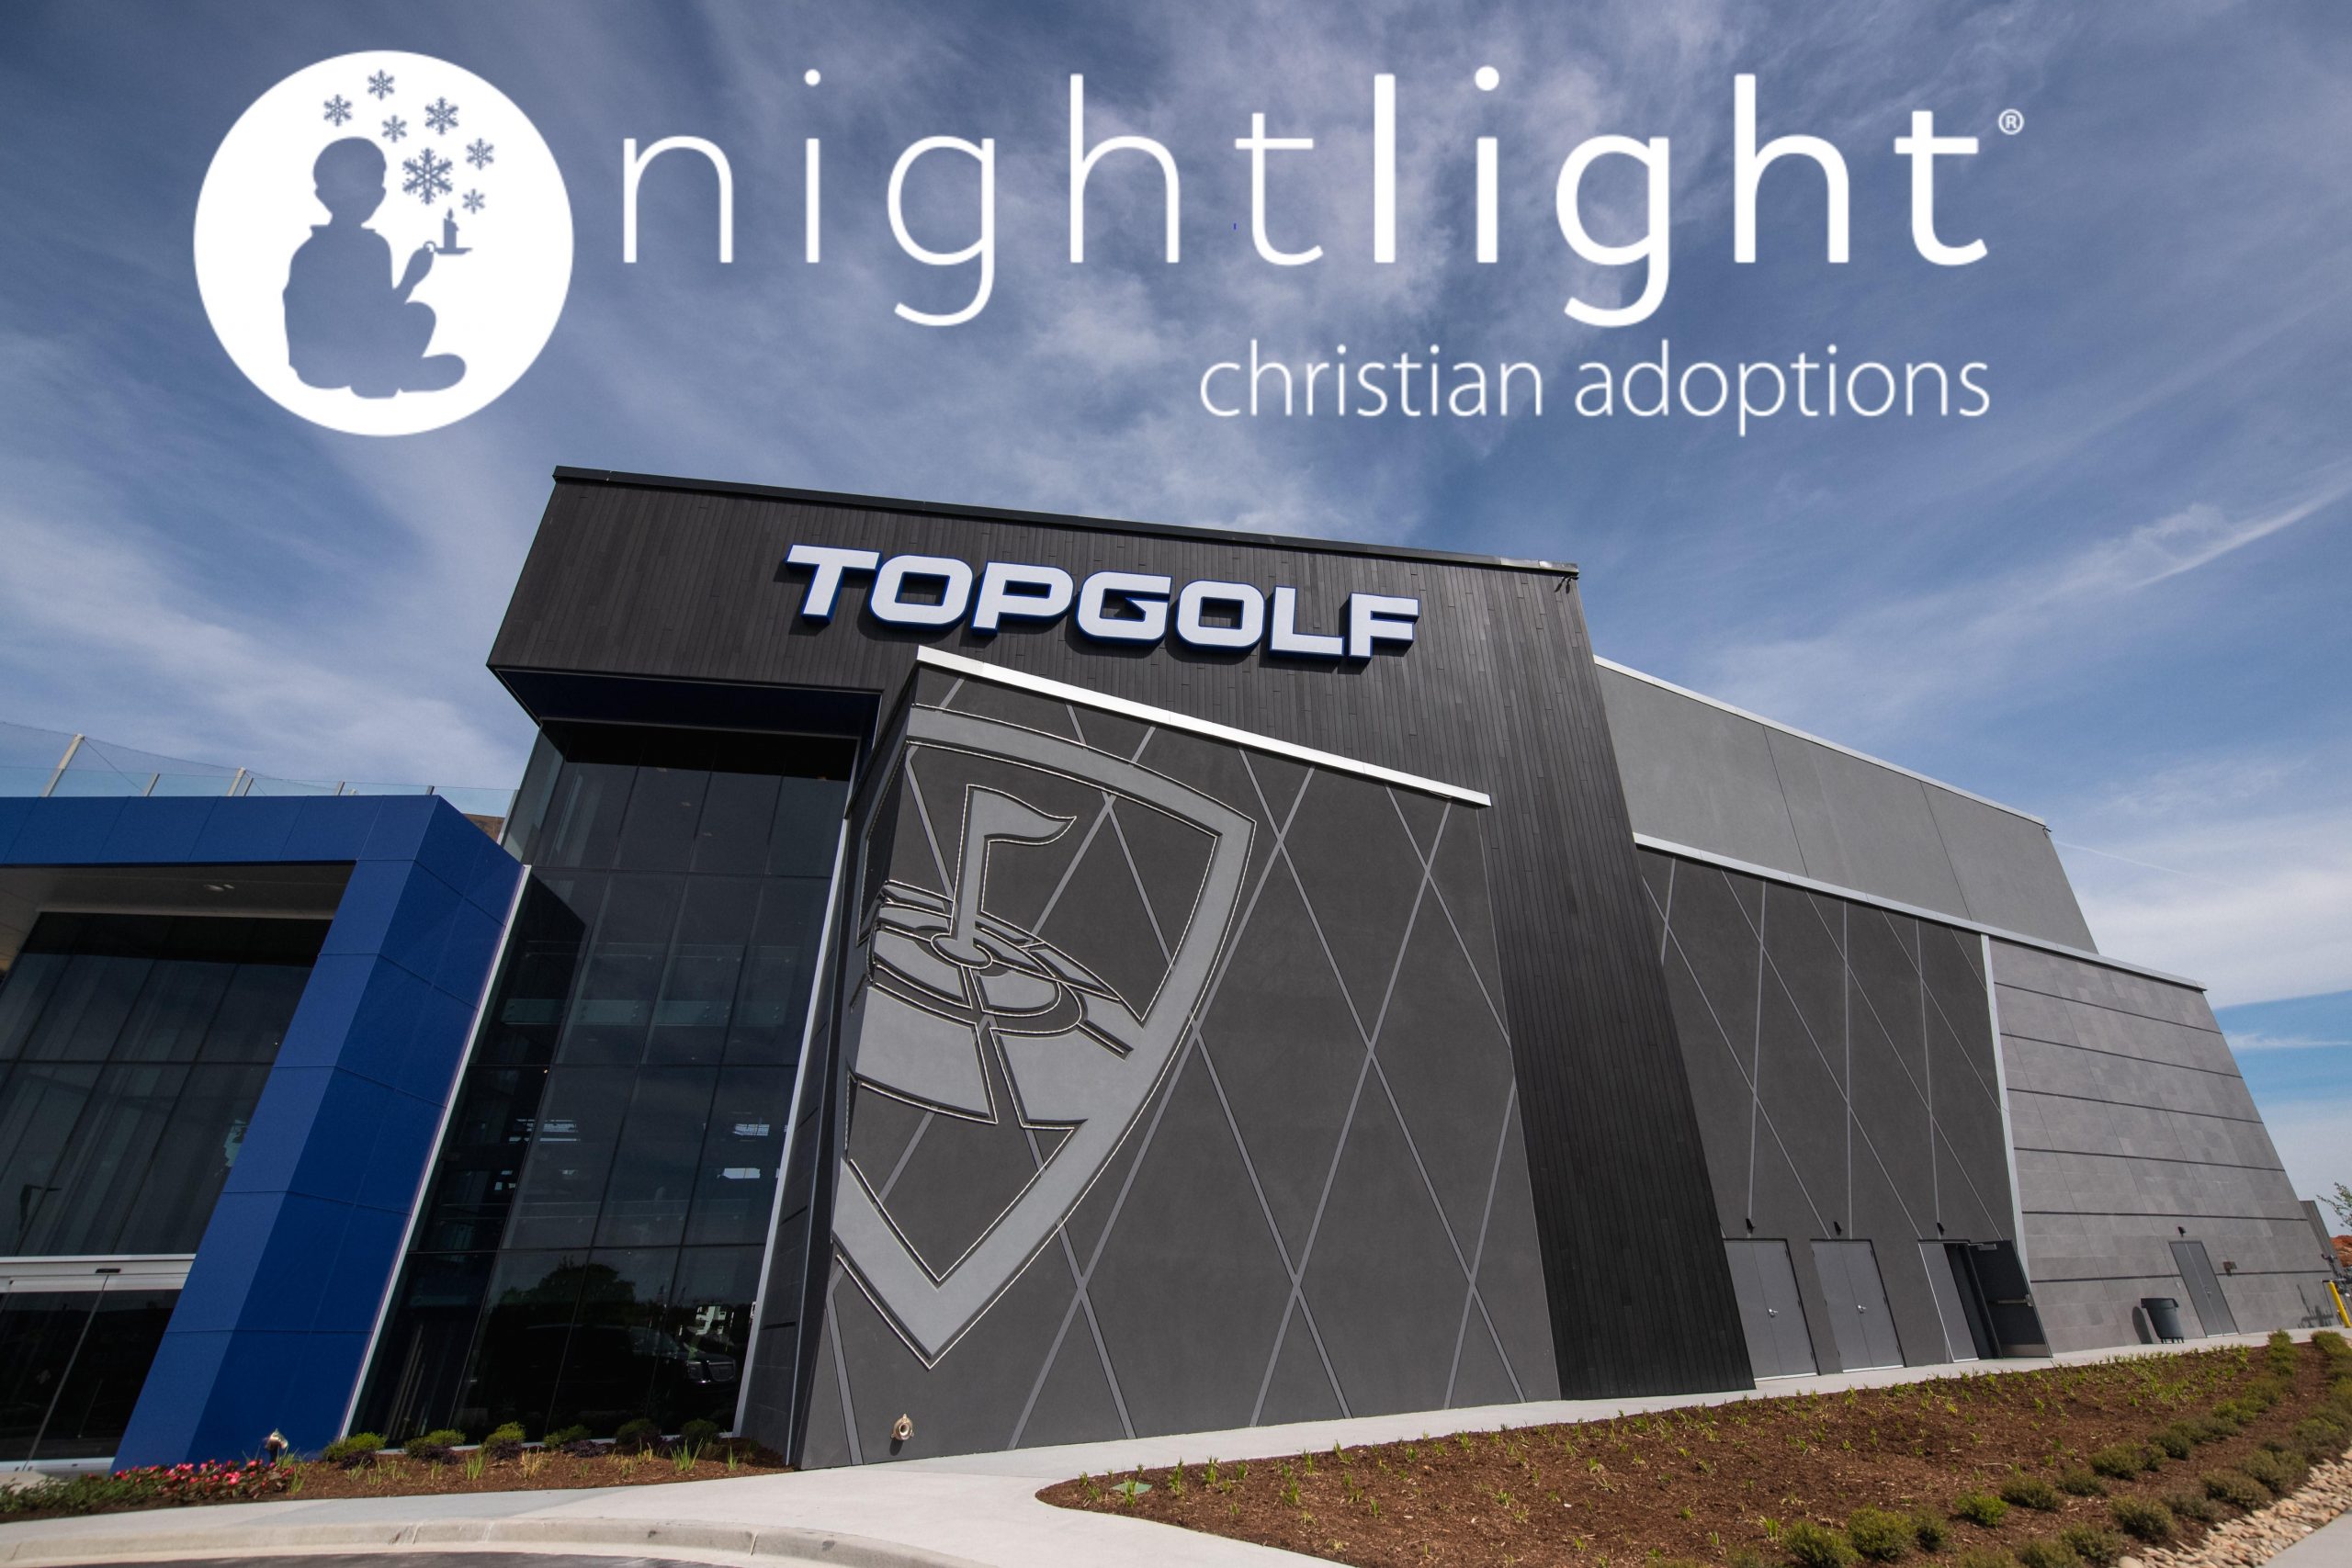 Nightlight Christian Adoptions First Annual Golf Tournament